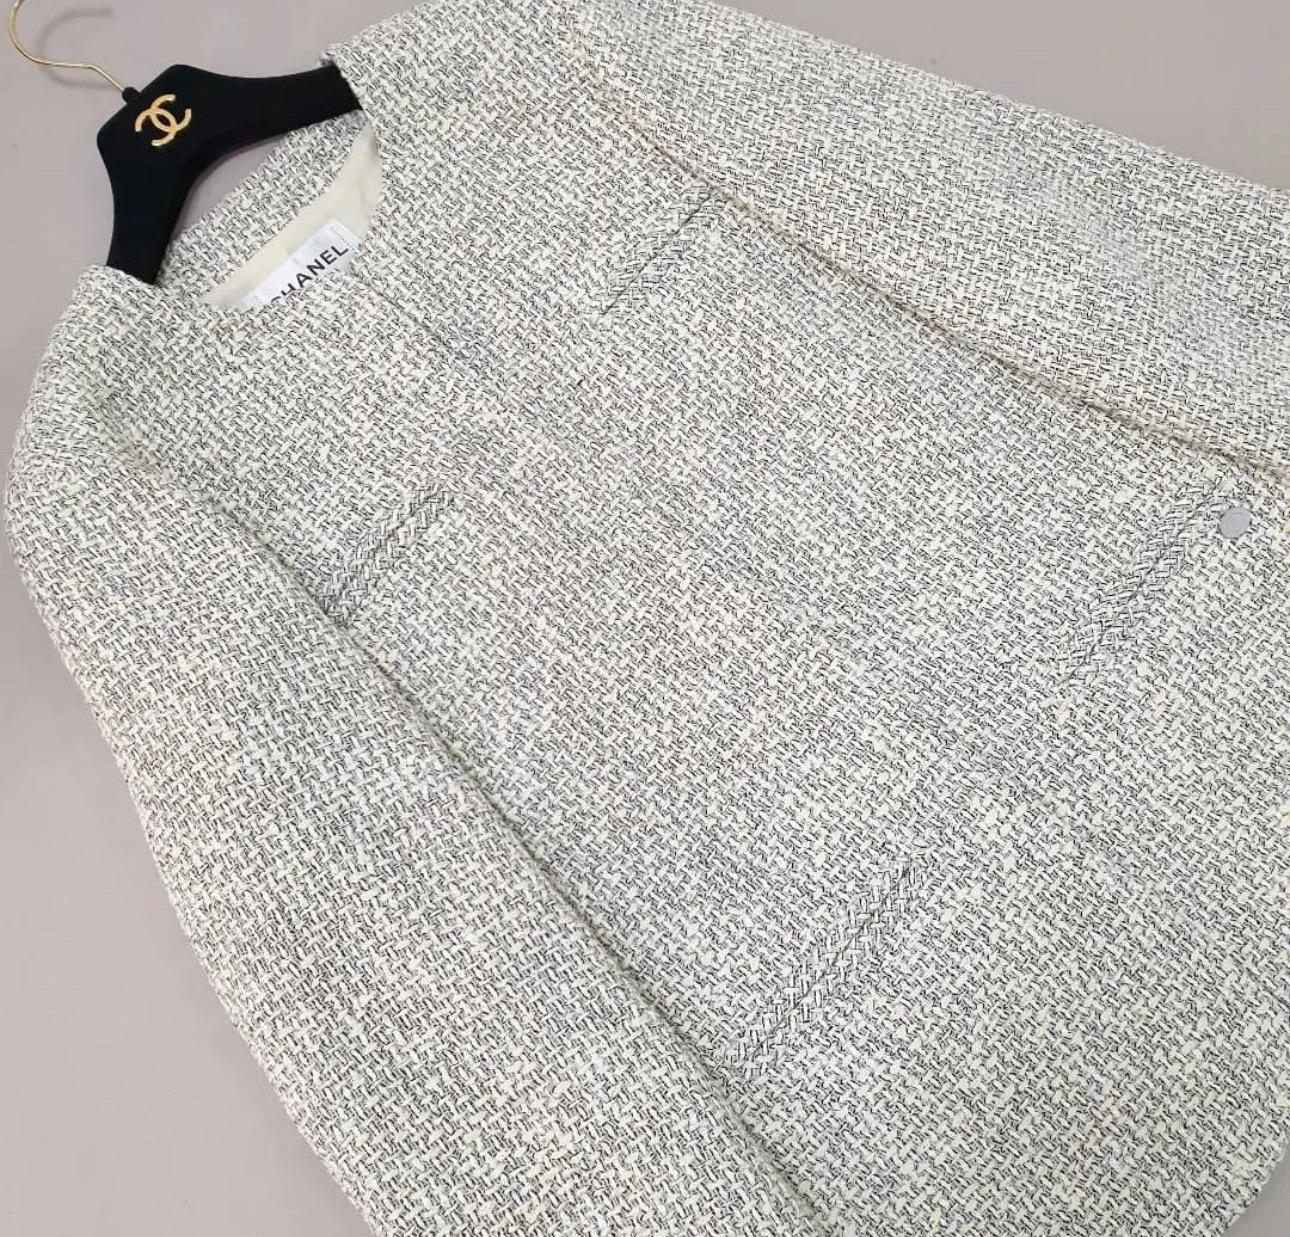 Chanel Tweed Short Coat In Excellent Condition For Sale In Krakow, PL